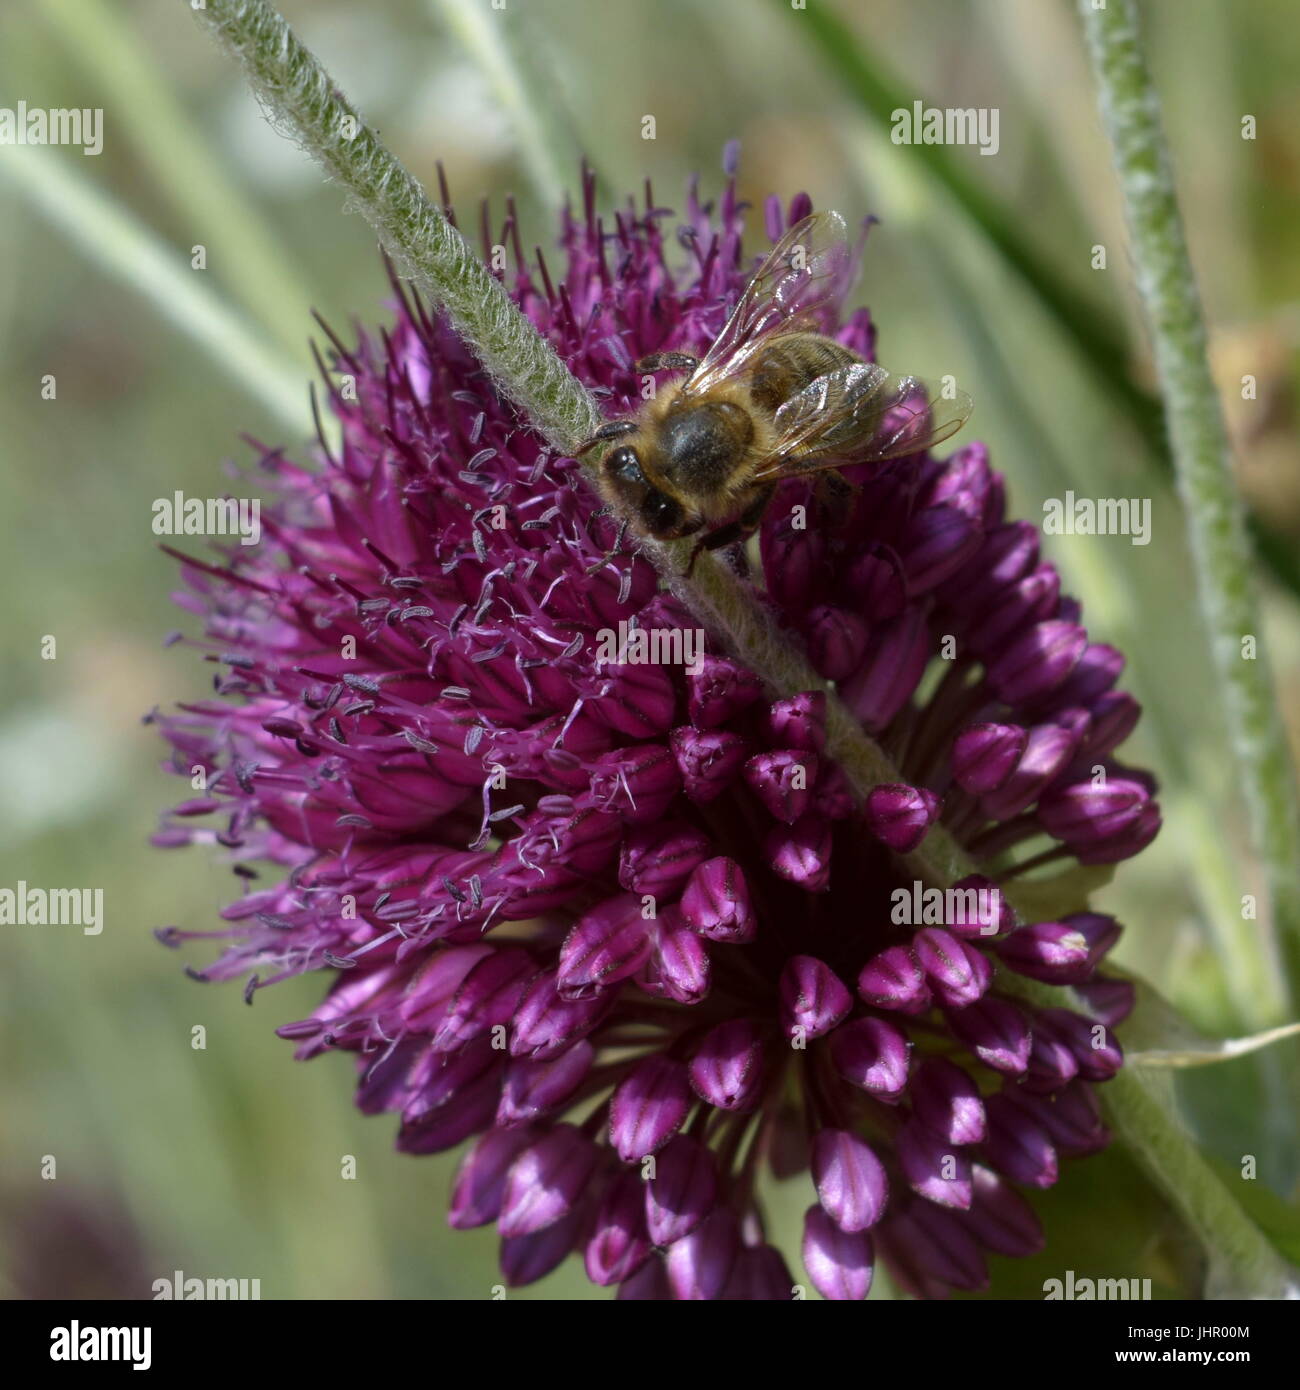 Closeup of honey bee resting on purple allium flower head Stock Photo